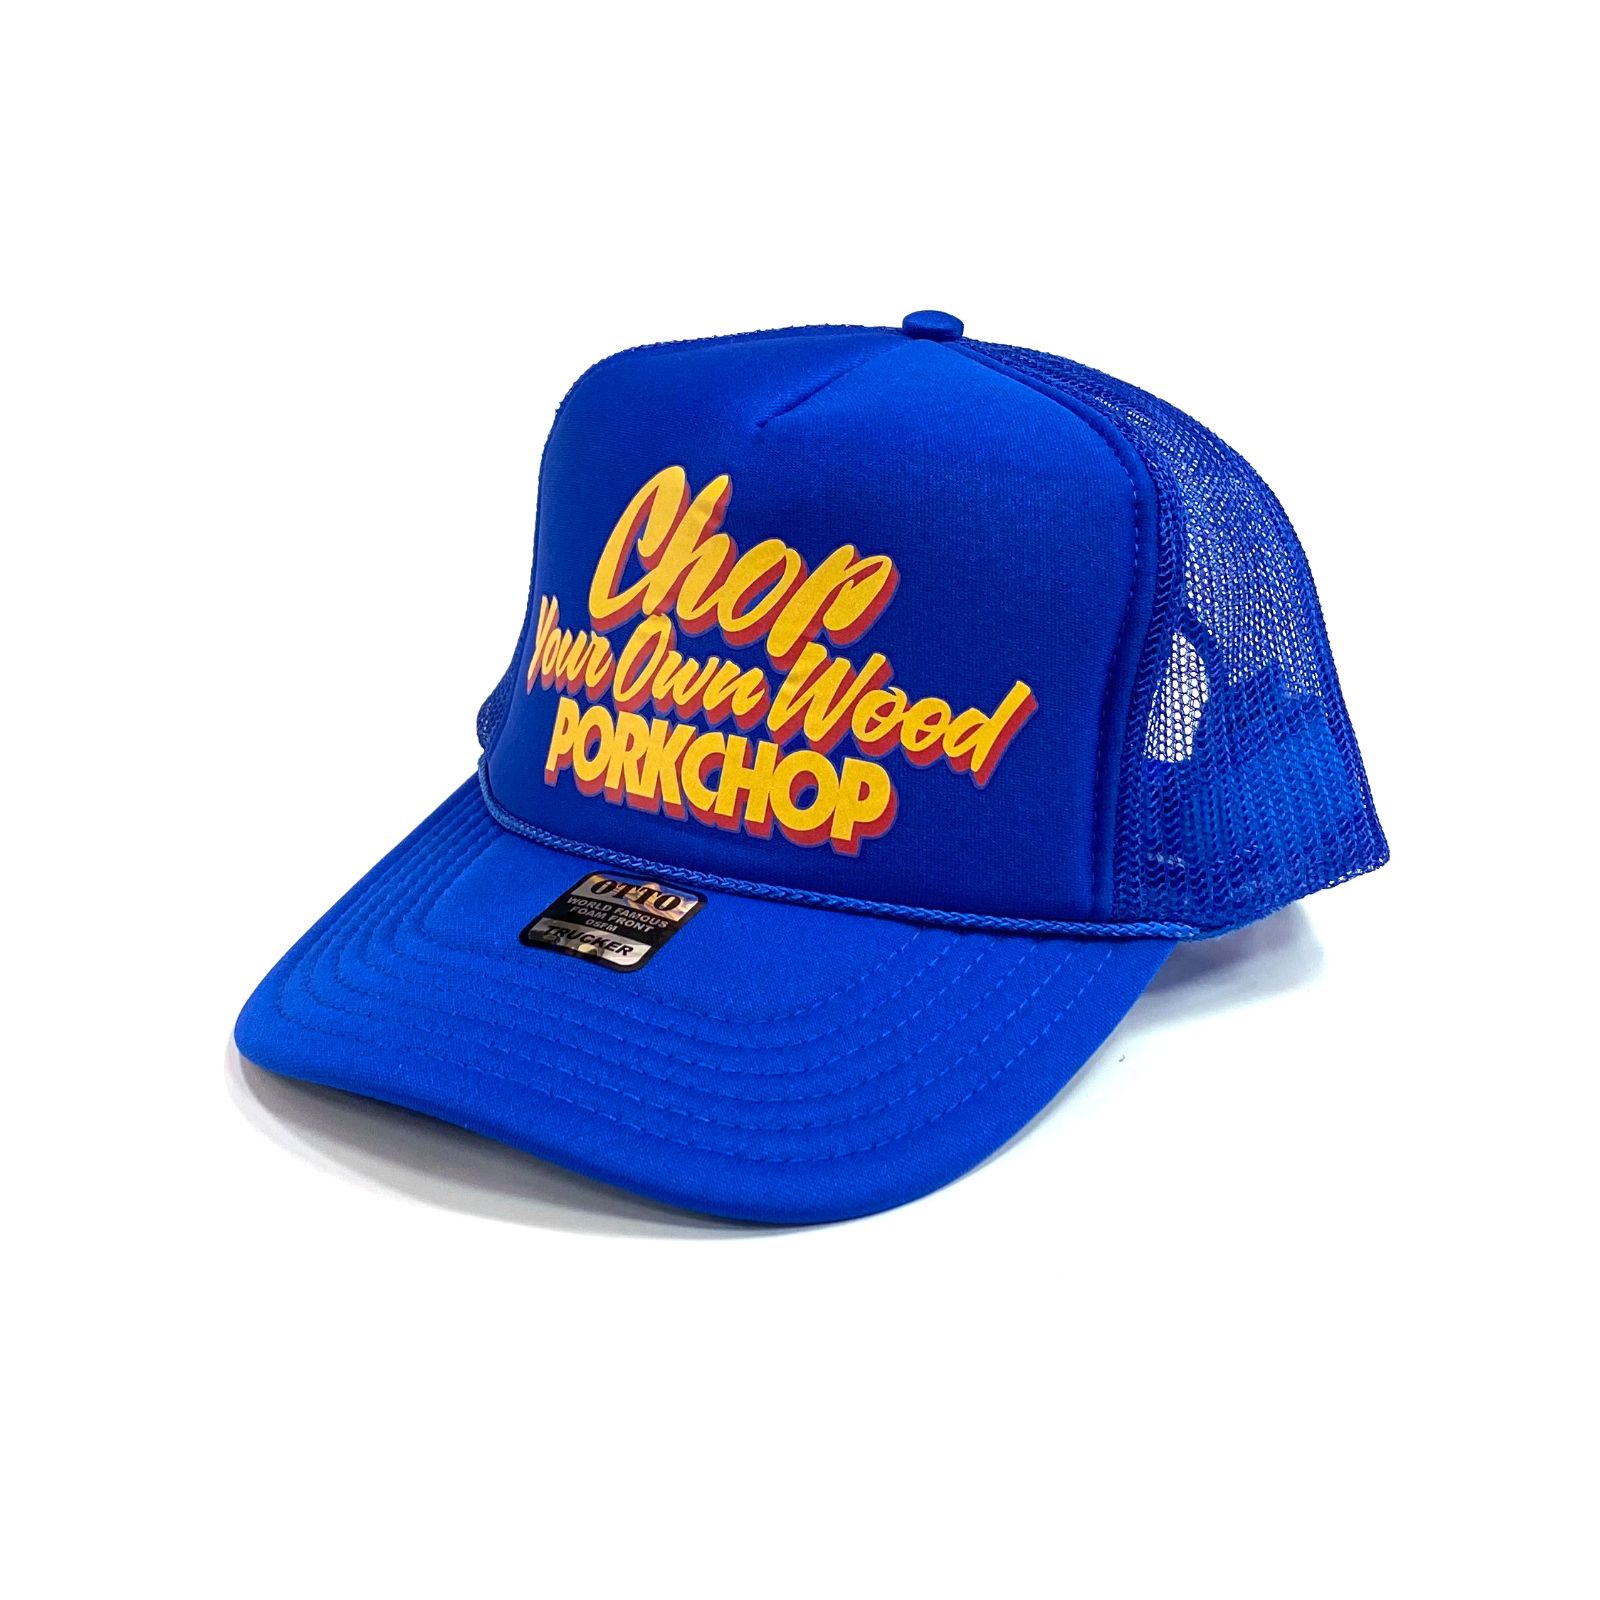 PORKCHOP - CHOP YOUR OWN WOOD CAP (BLUE) / プリントメッシュ